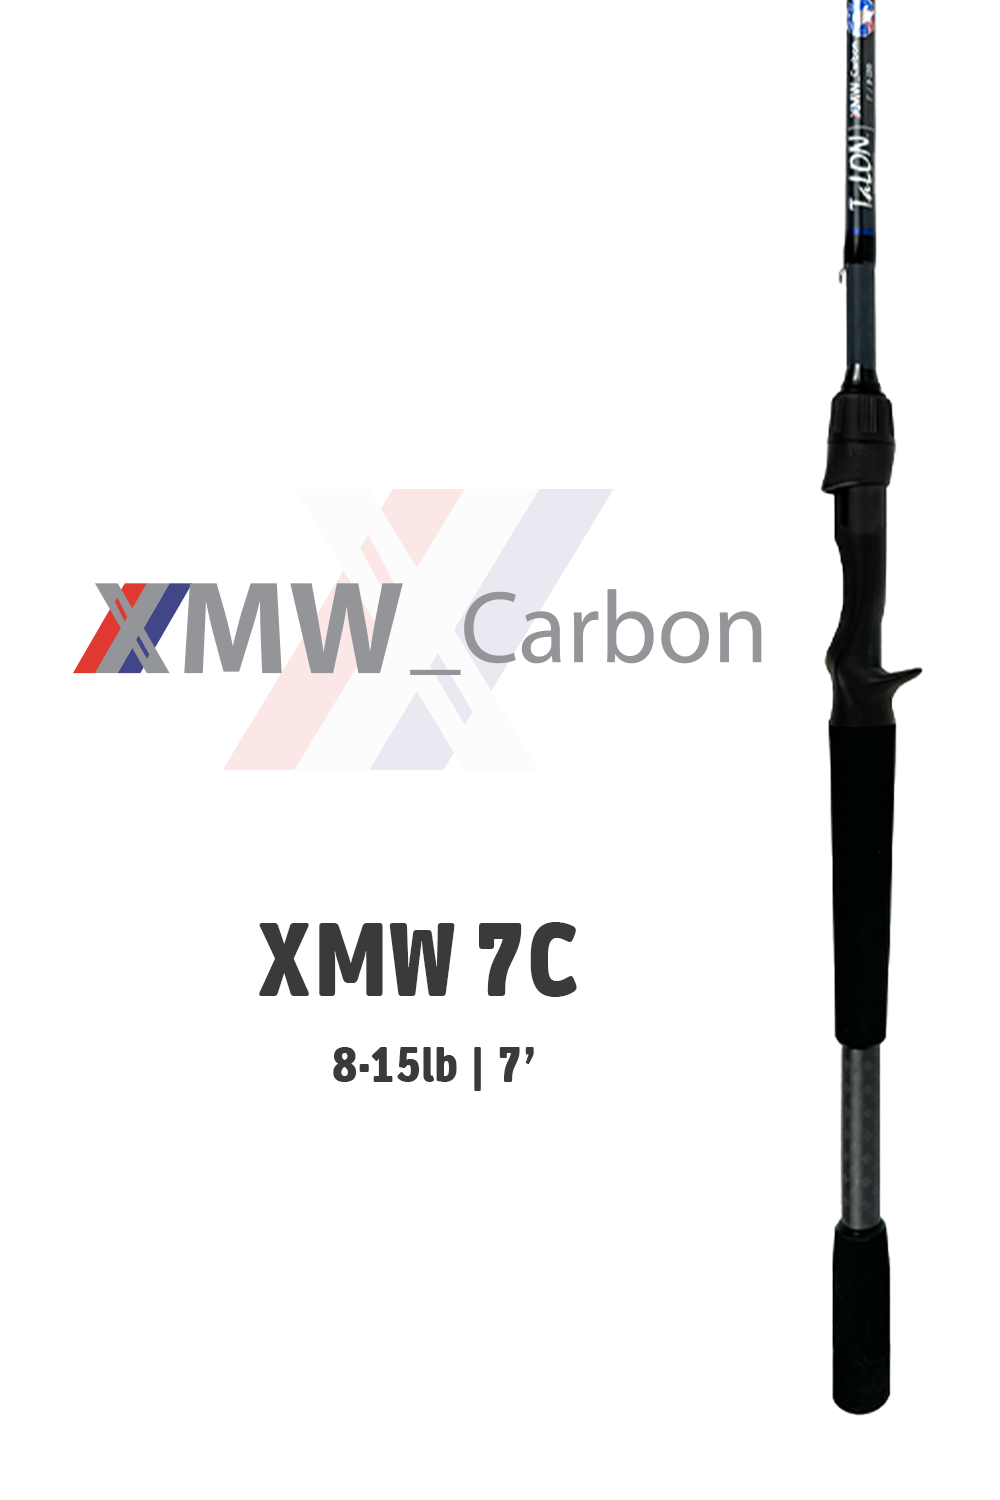 XMW_Carbon - Casting | 8-15lb - 7'